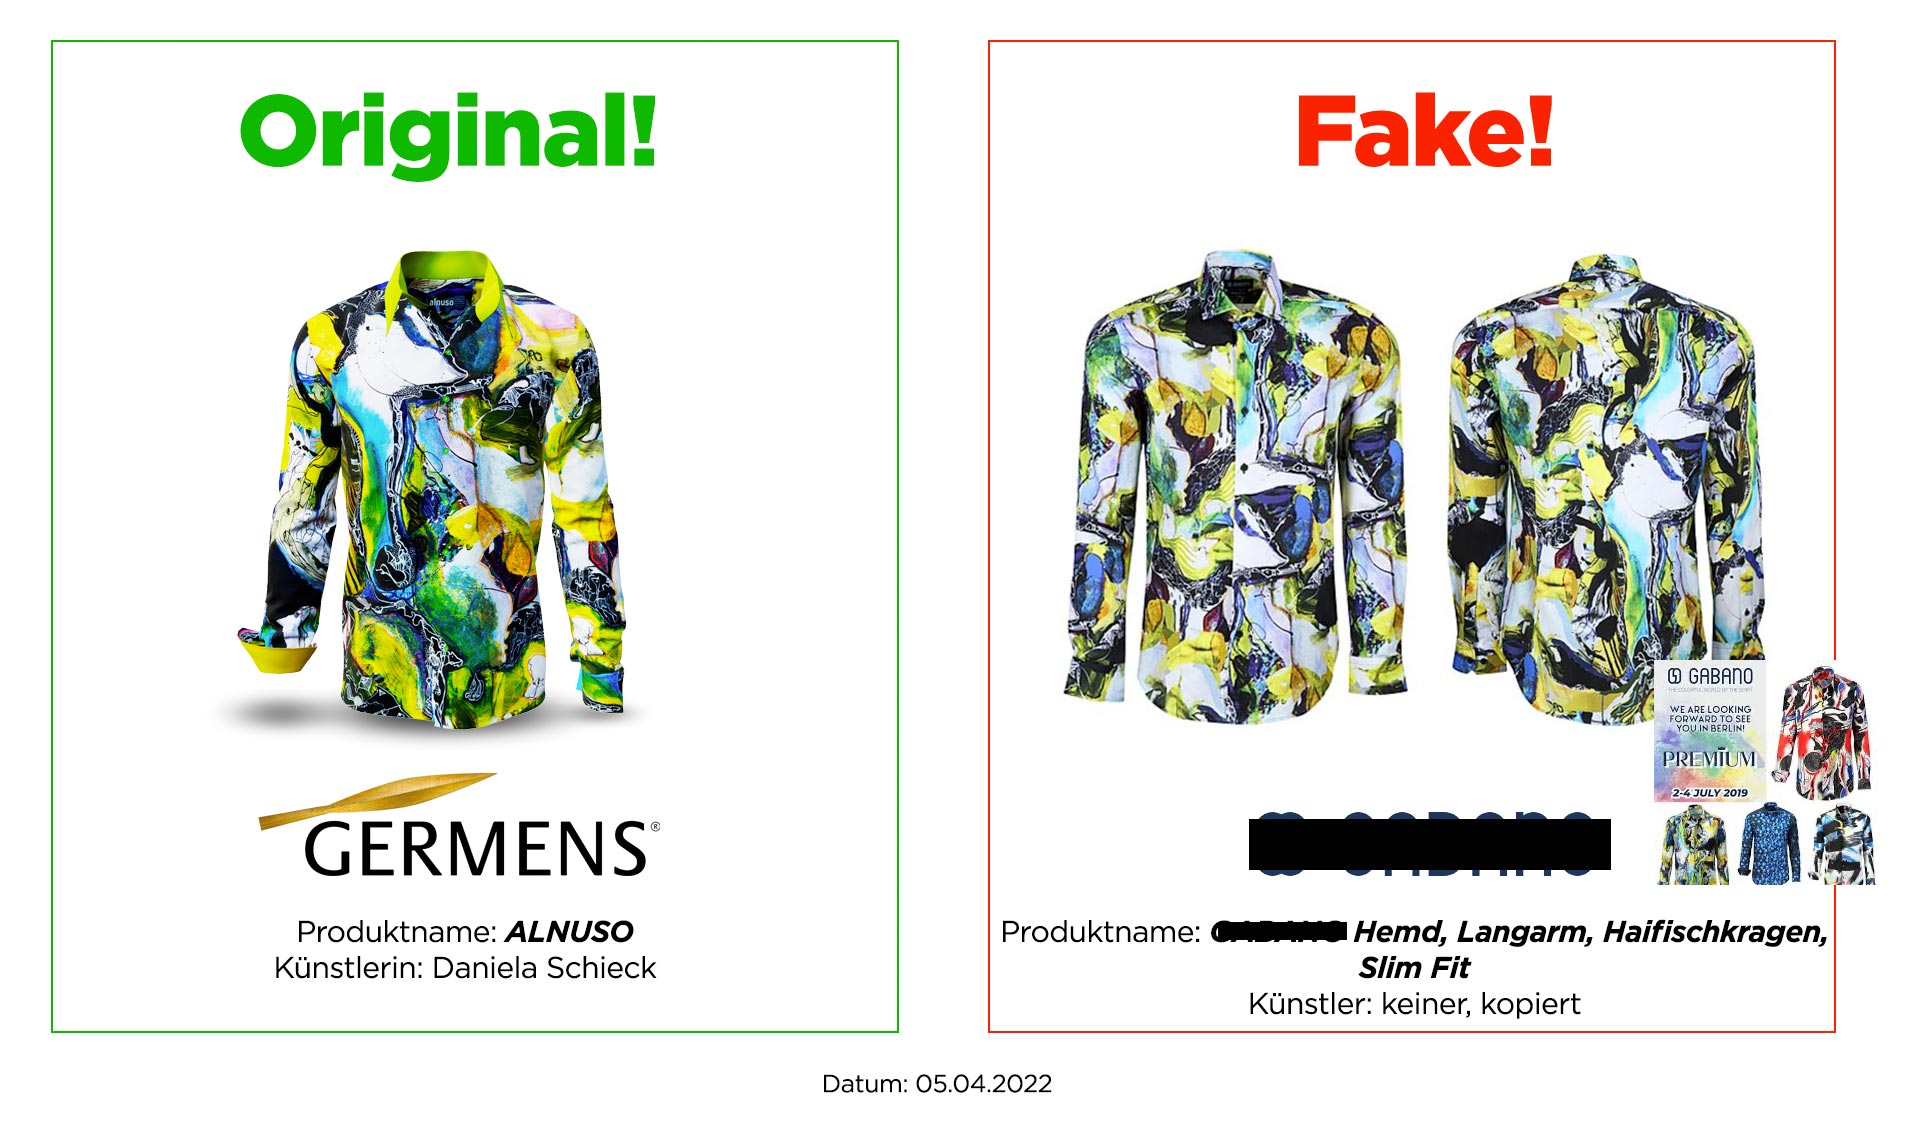 Original GERMENS® shirt ALNUSO and plagiarism